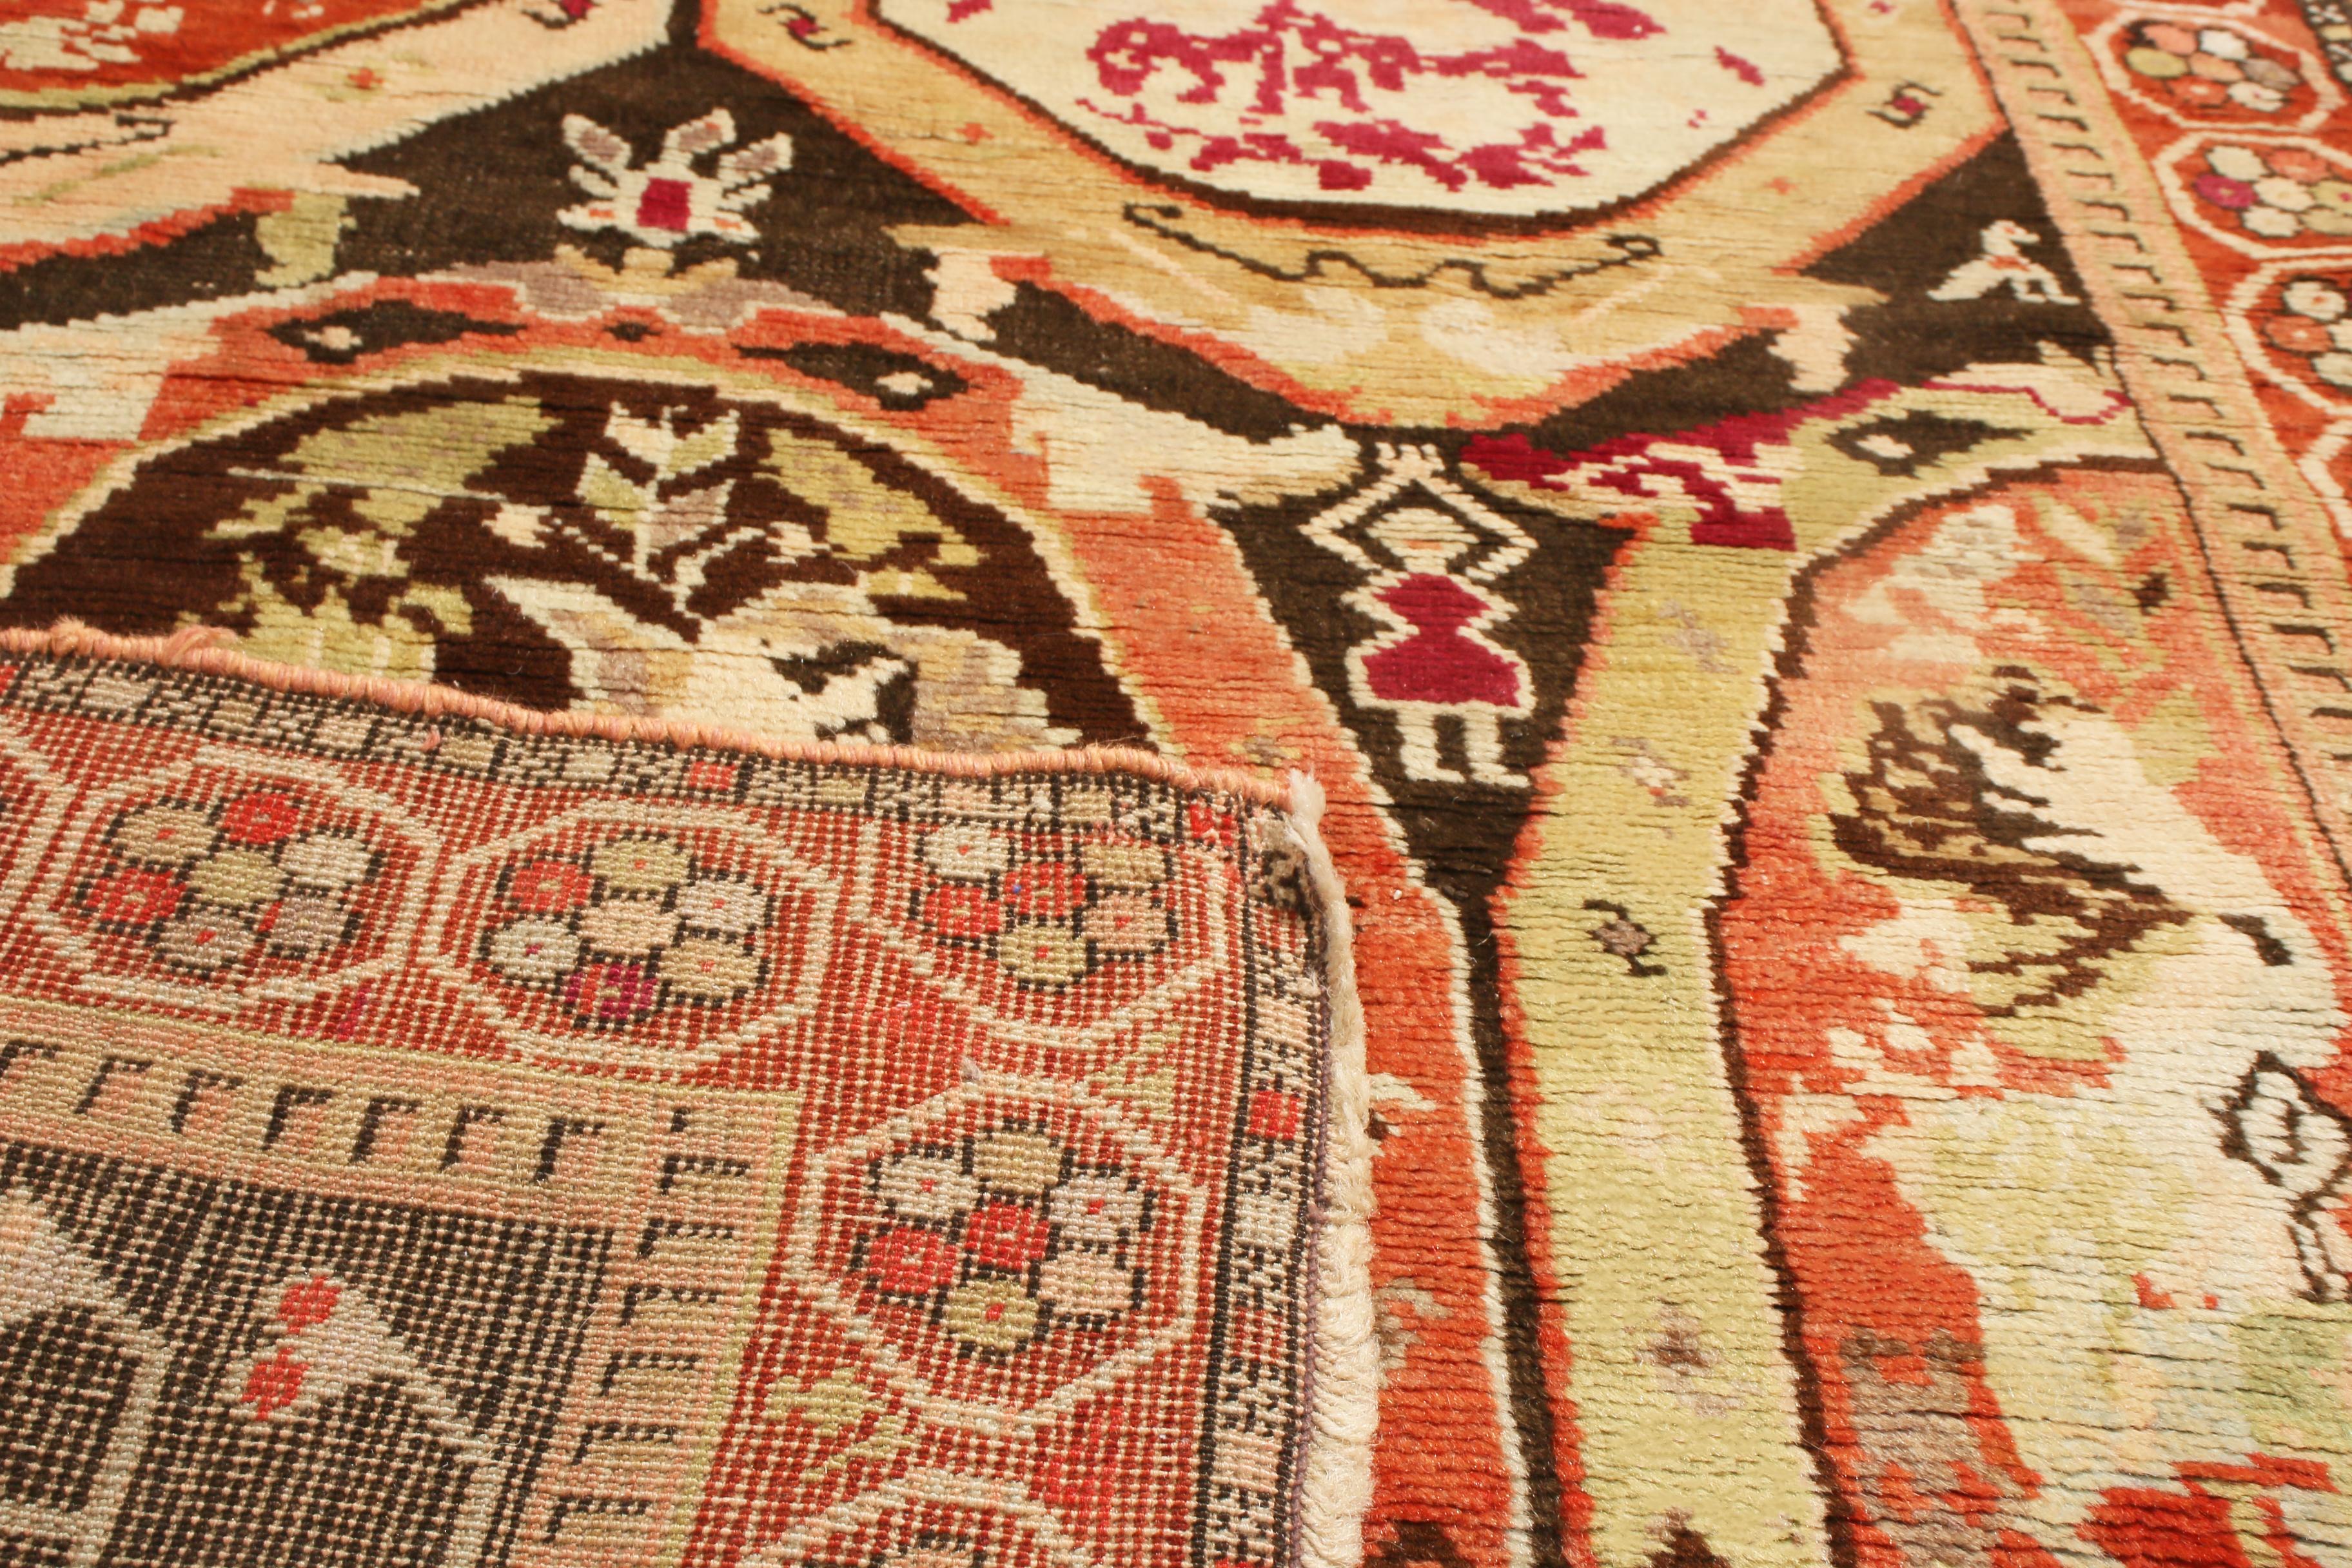 Late 19th Century Antique Karabagh Magenta and Brown Wool Runner Geometric Pattern by Rug & Kilim